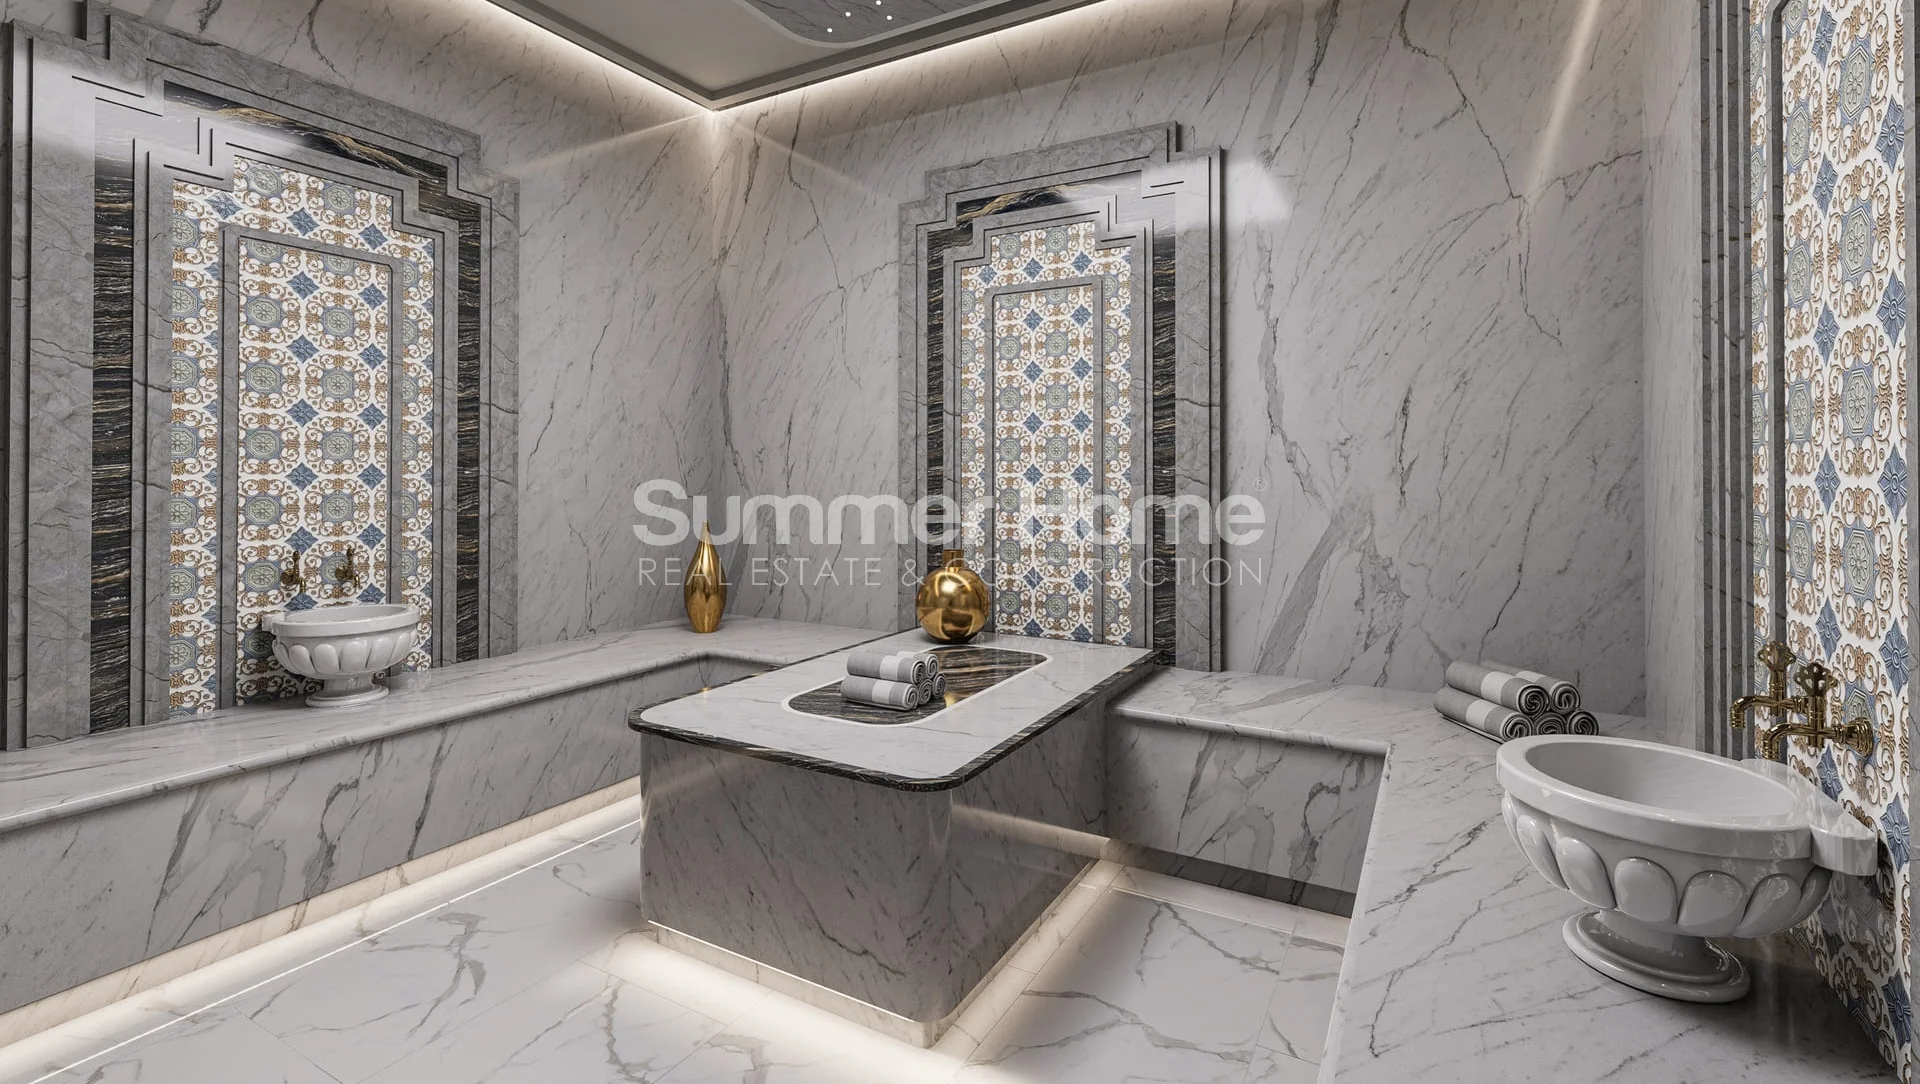 Luxury Five-Bedroomed Villa set in Stunning Kargicak Facilities - 20